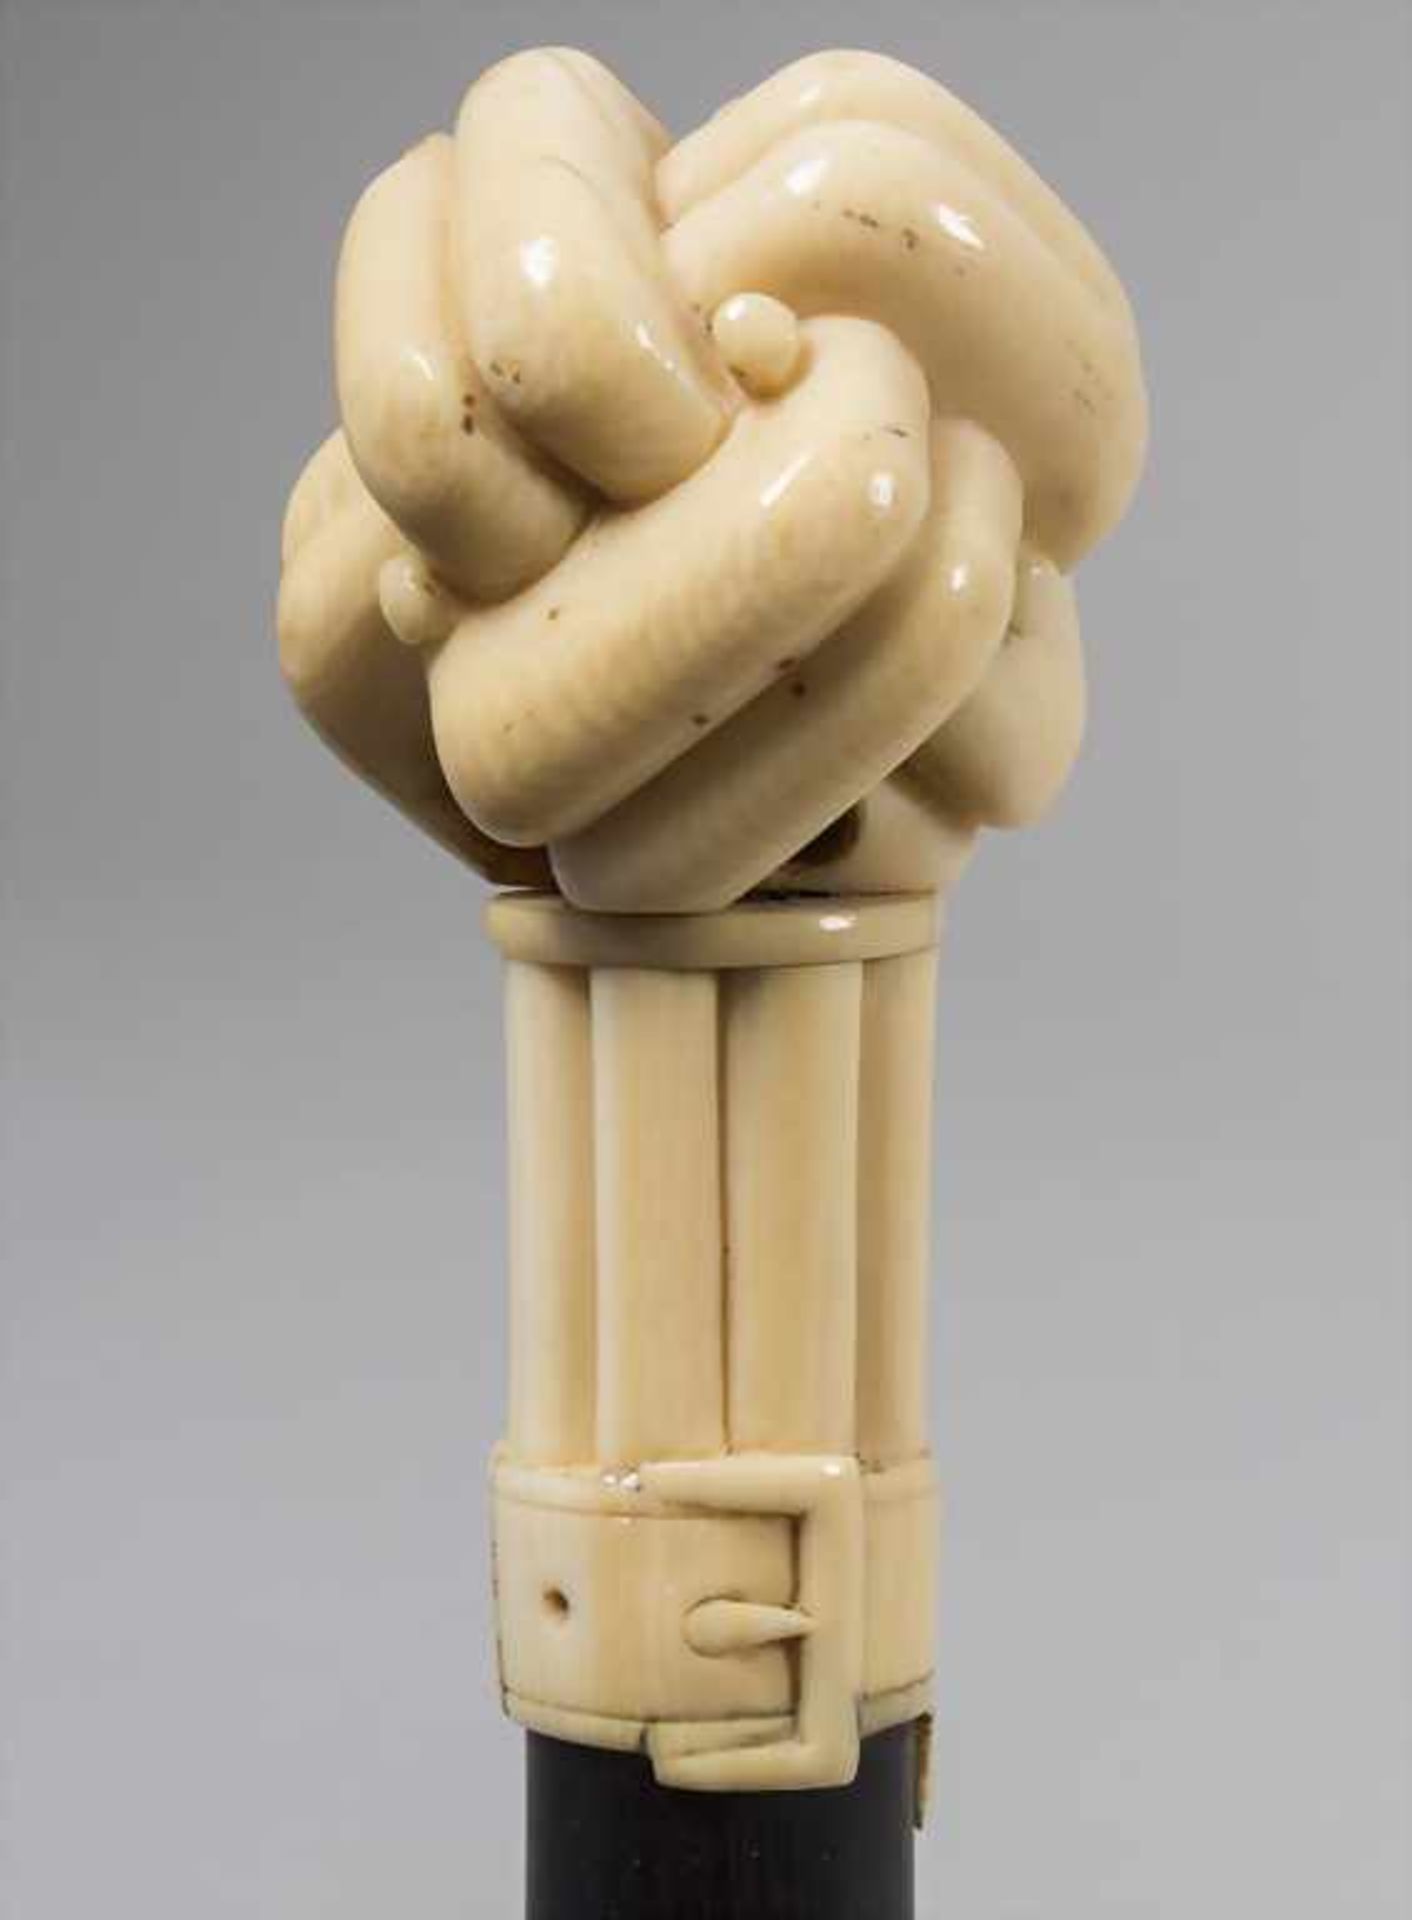 Sammlung 10 Gehstöcke / A collection of 10 canes with ivory handle - Bild 27 aus 27